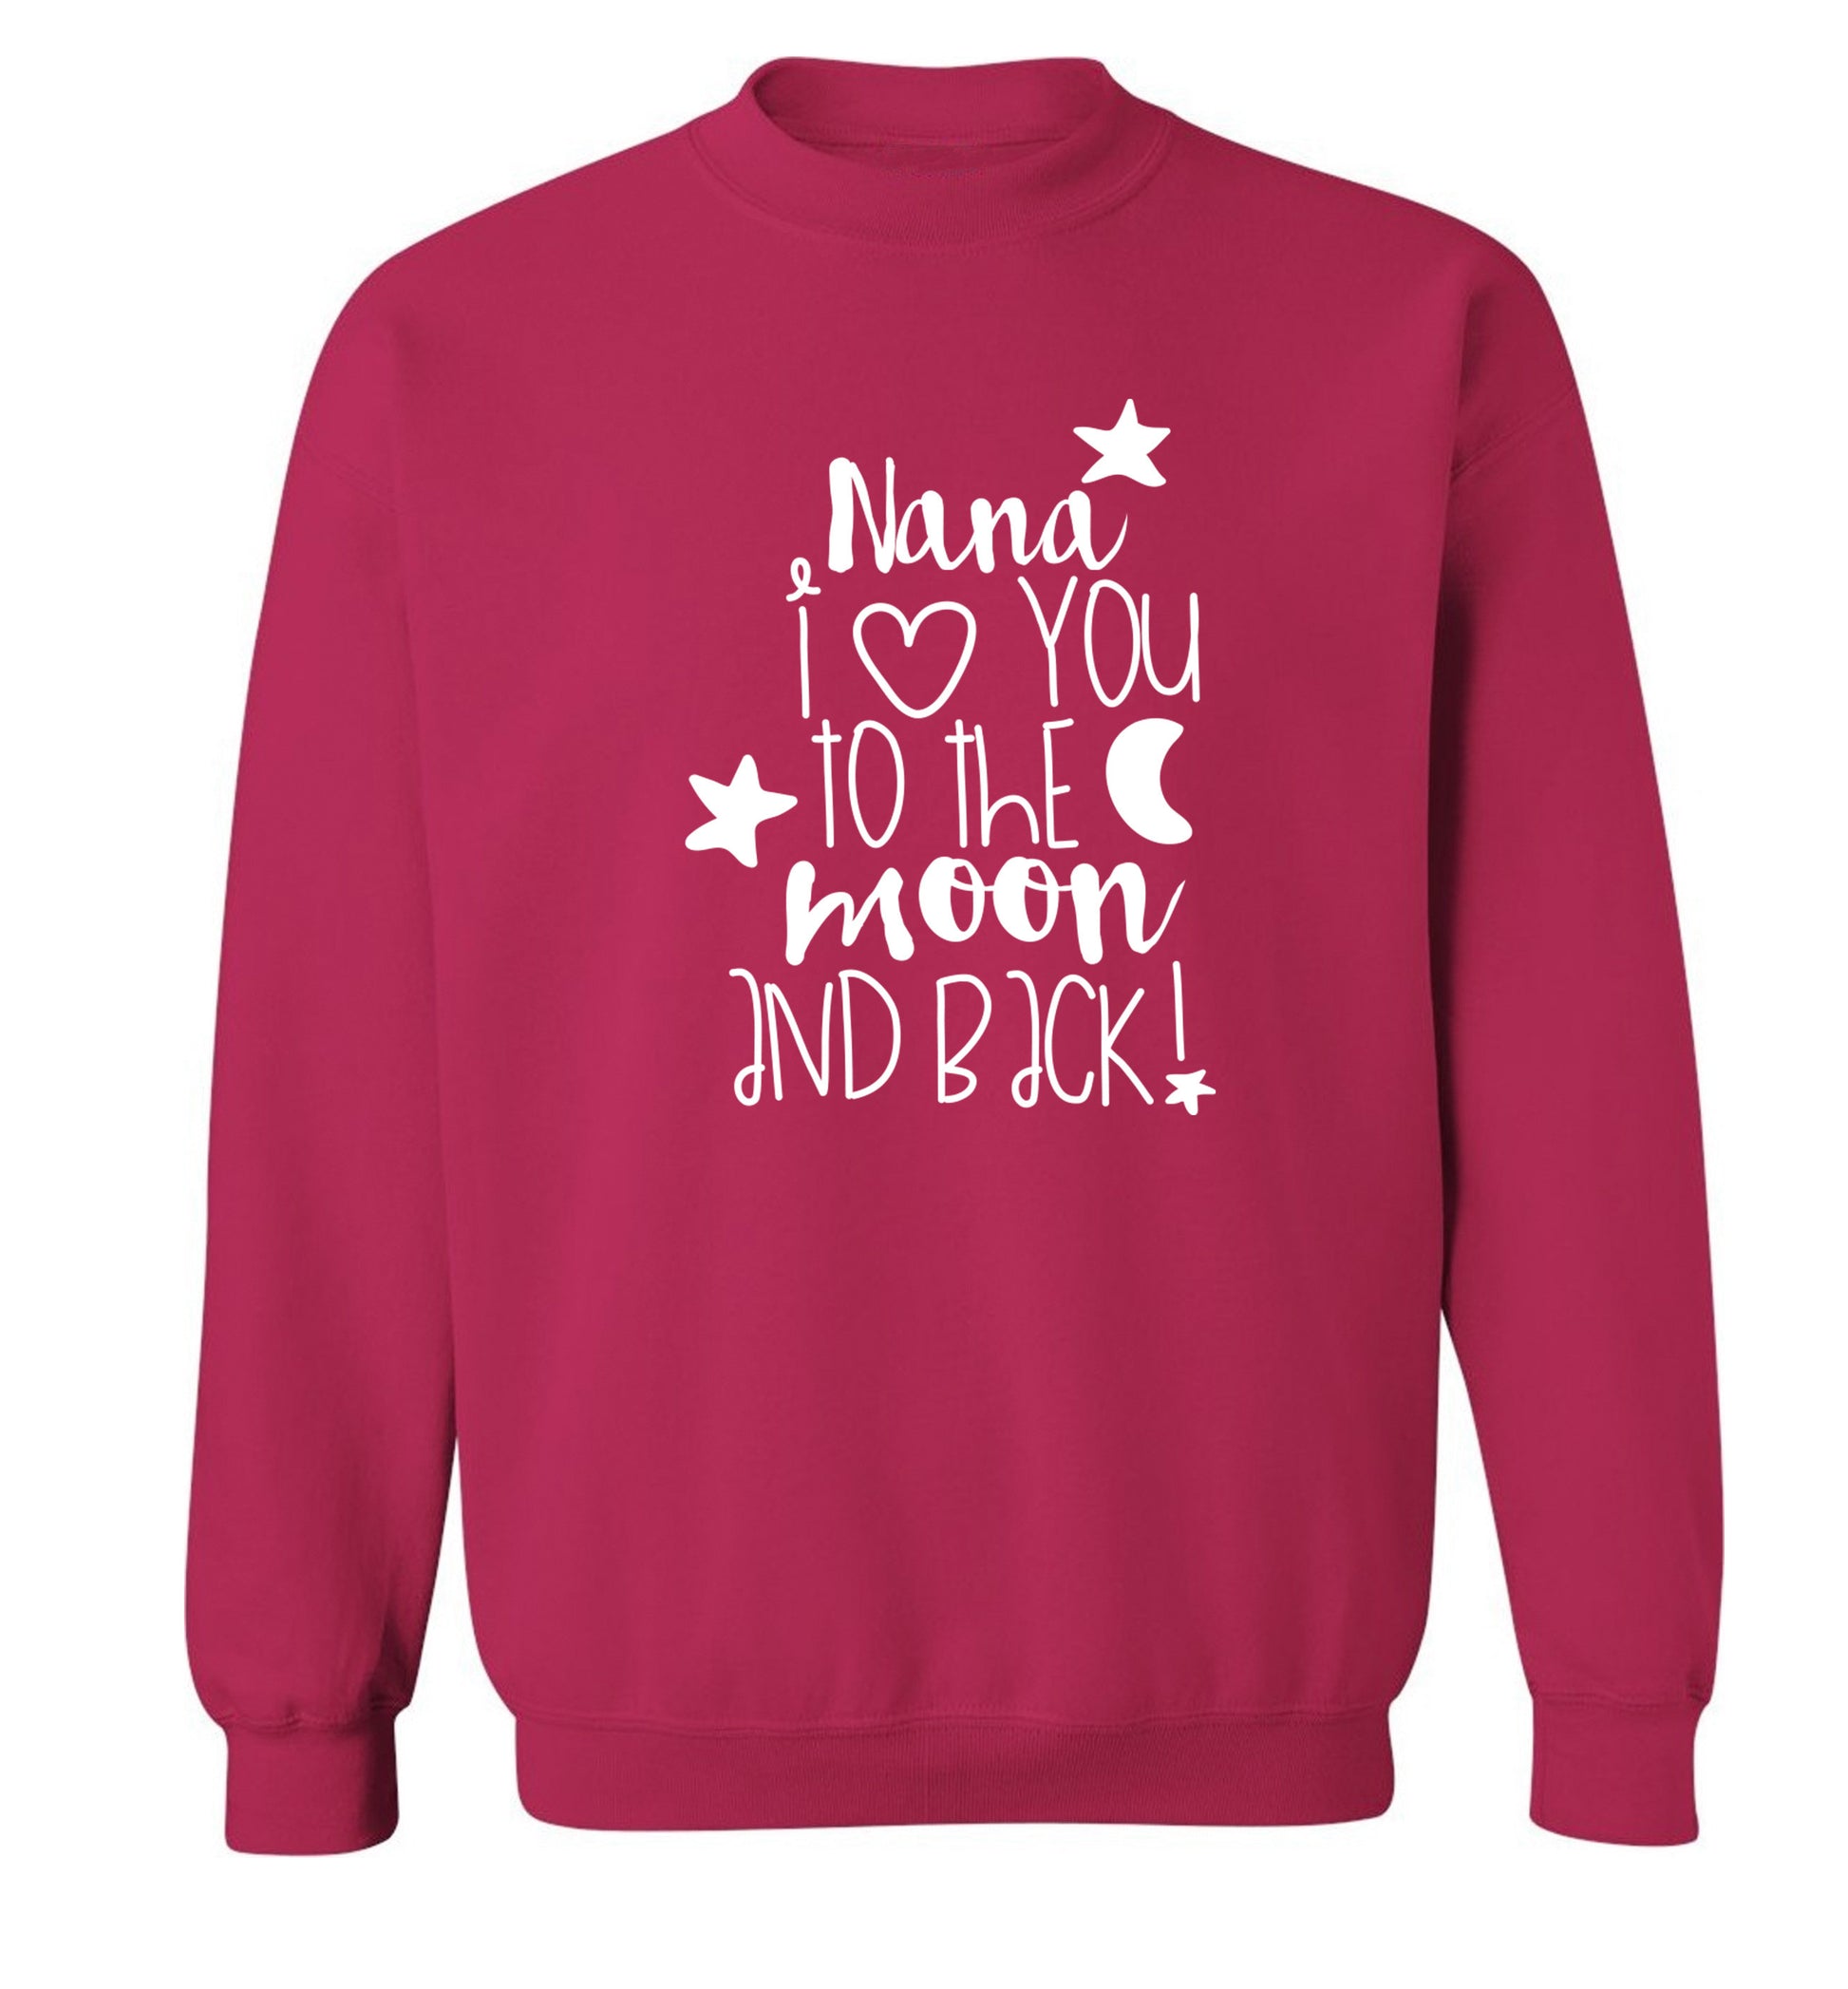 Nana's little bodybuilder Adult's unisex pink Sweater XL